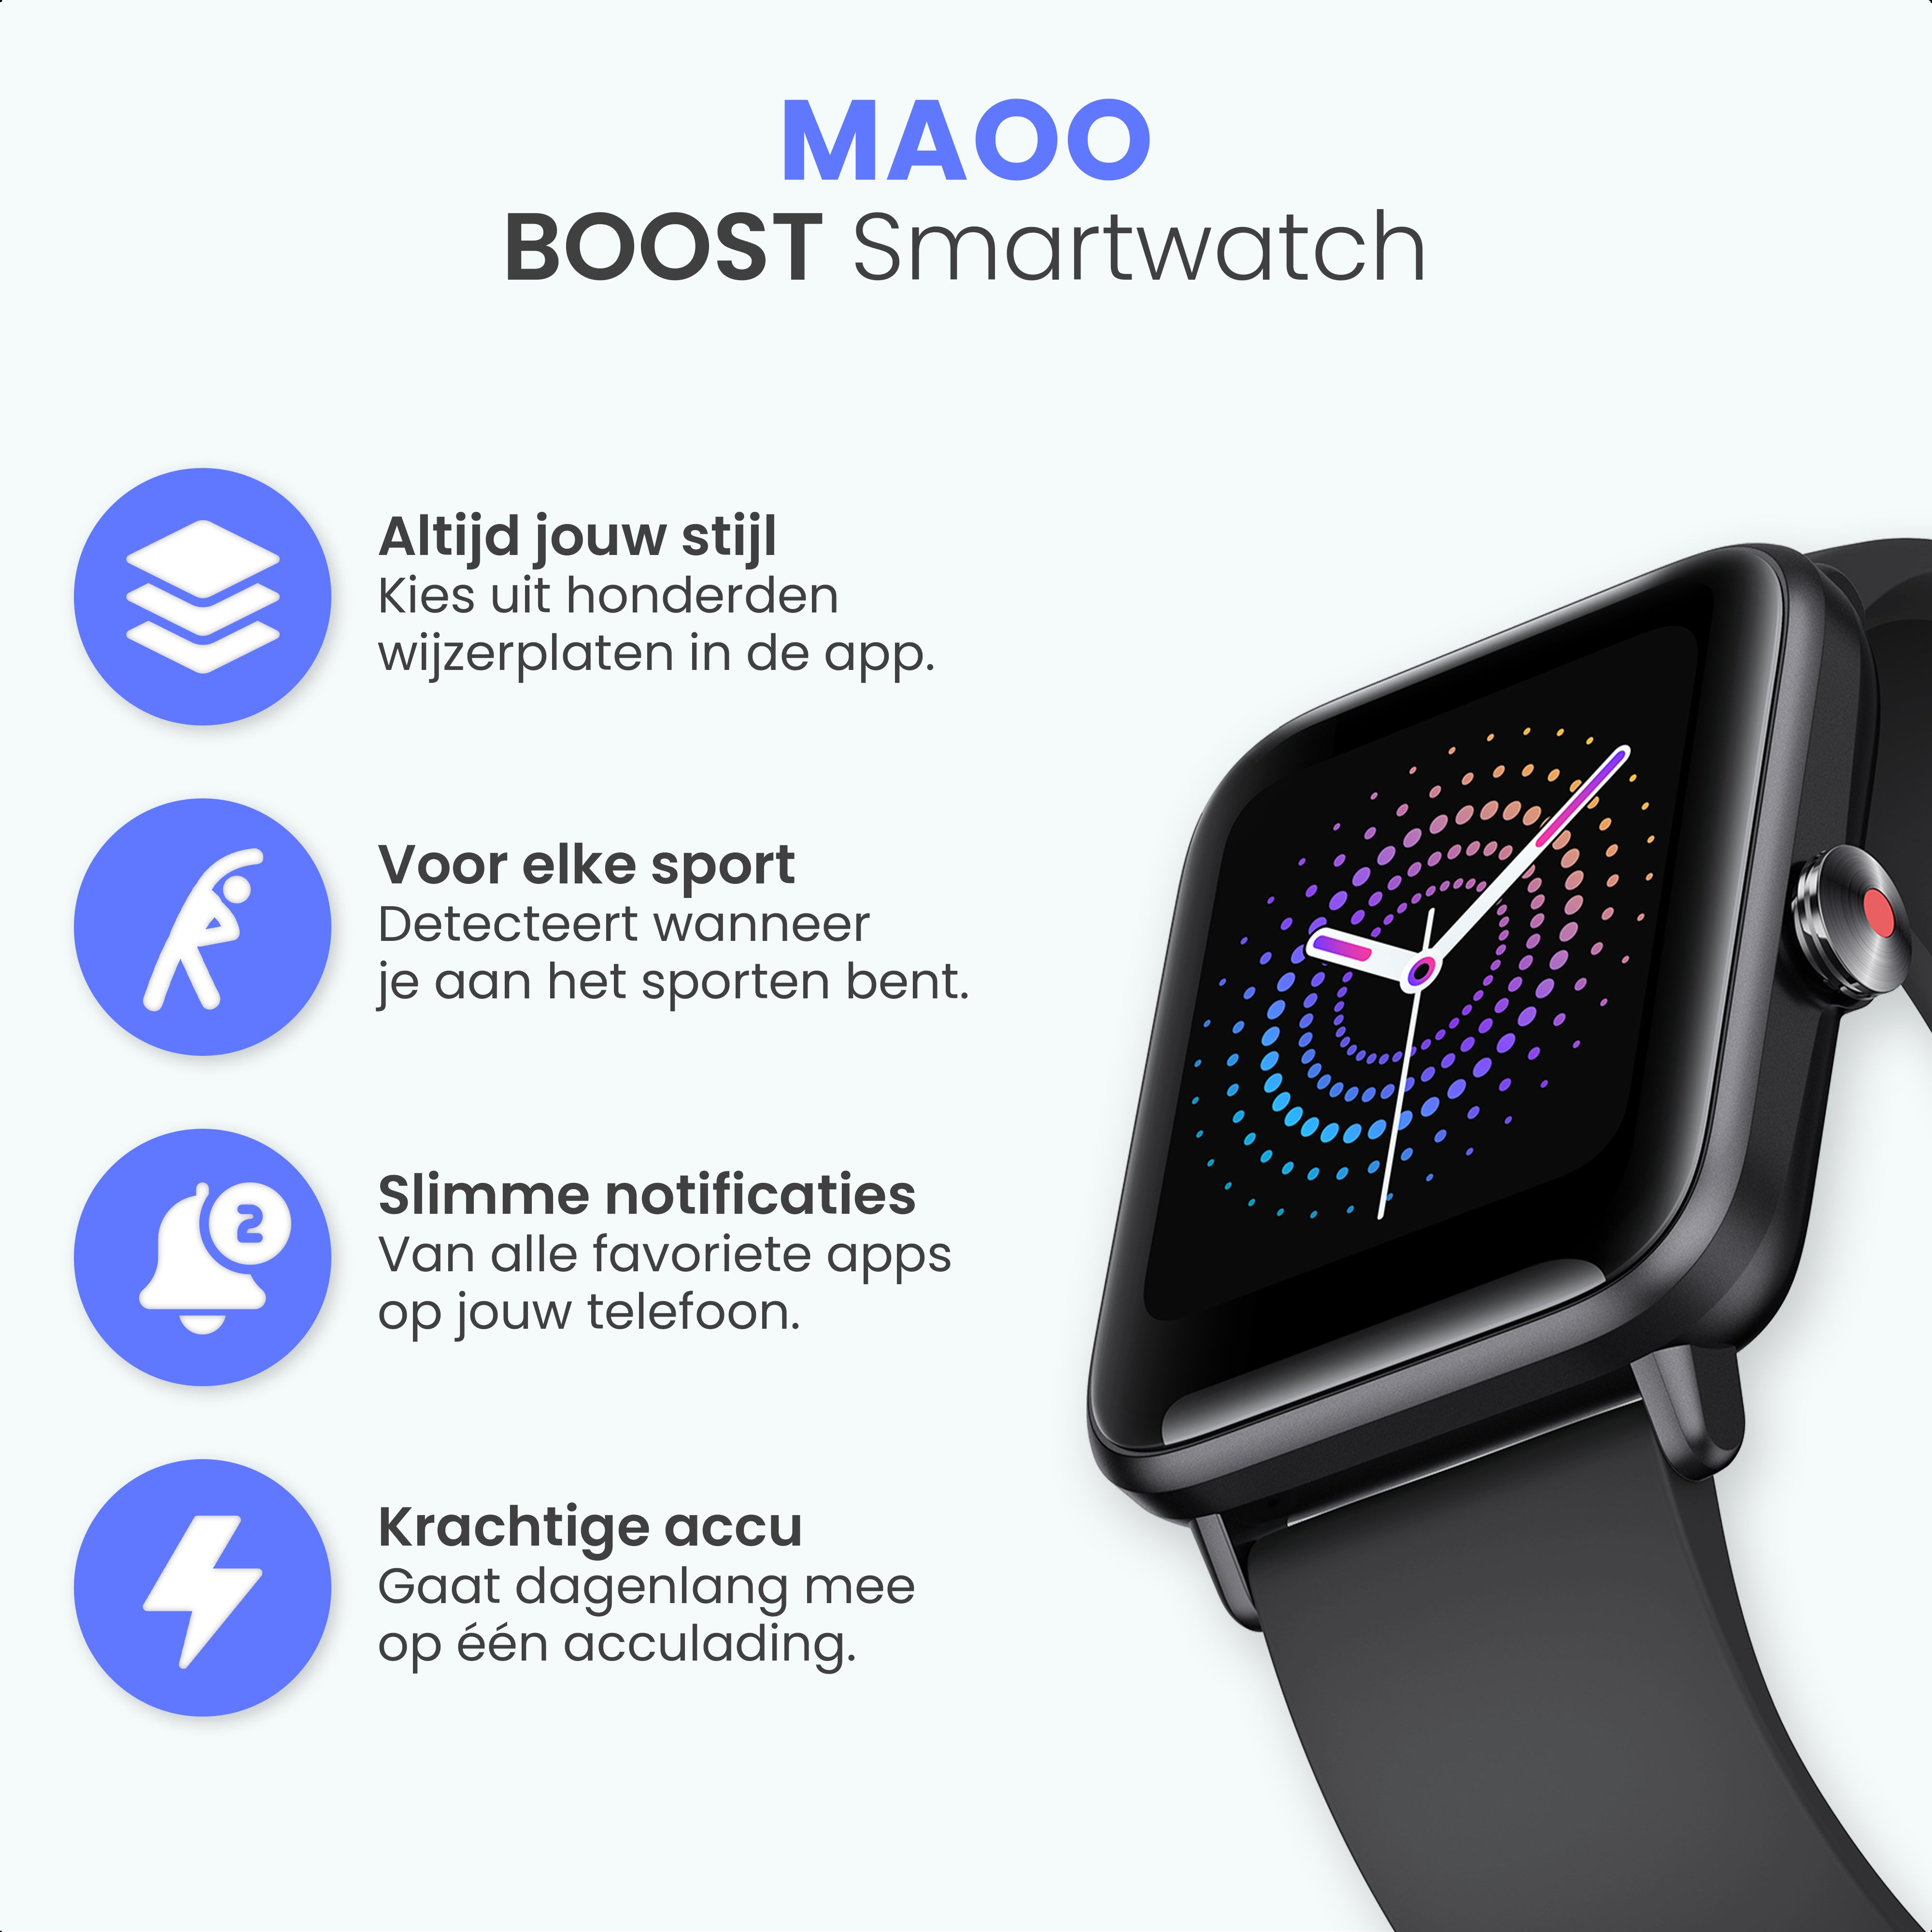 MAOO BOOST Smartwatch